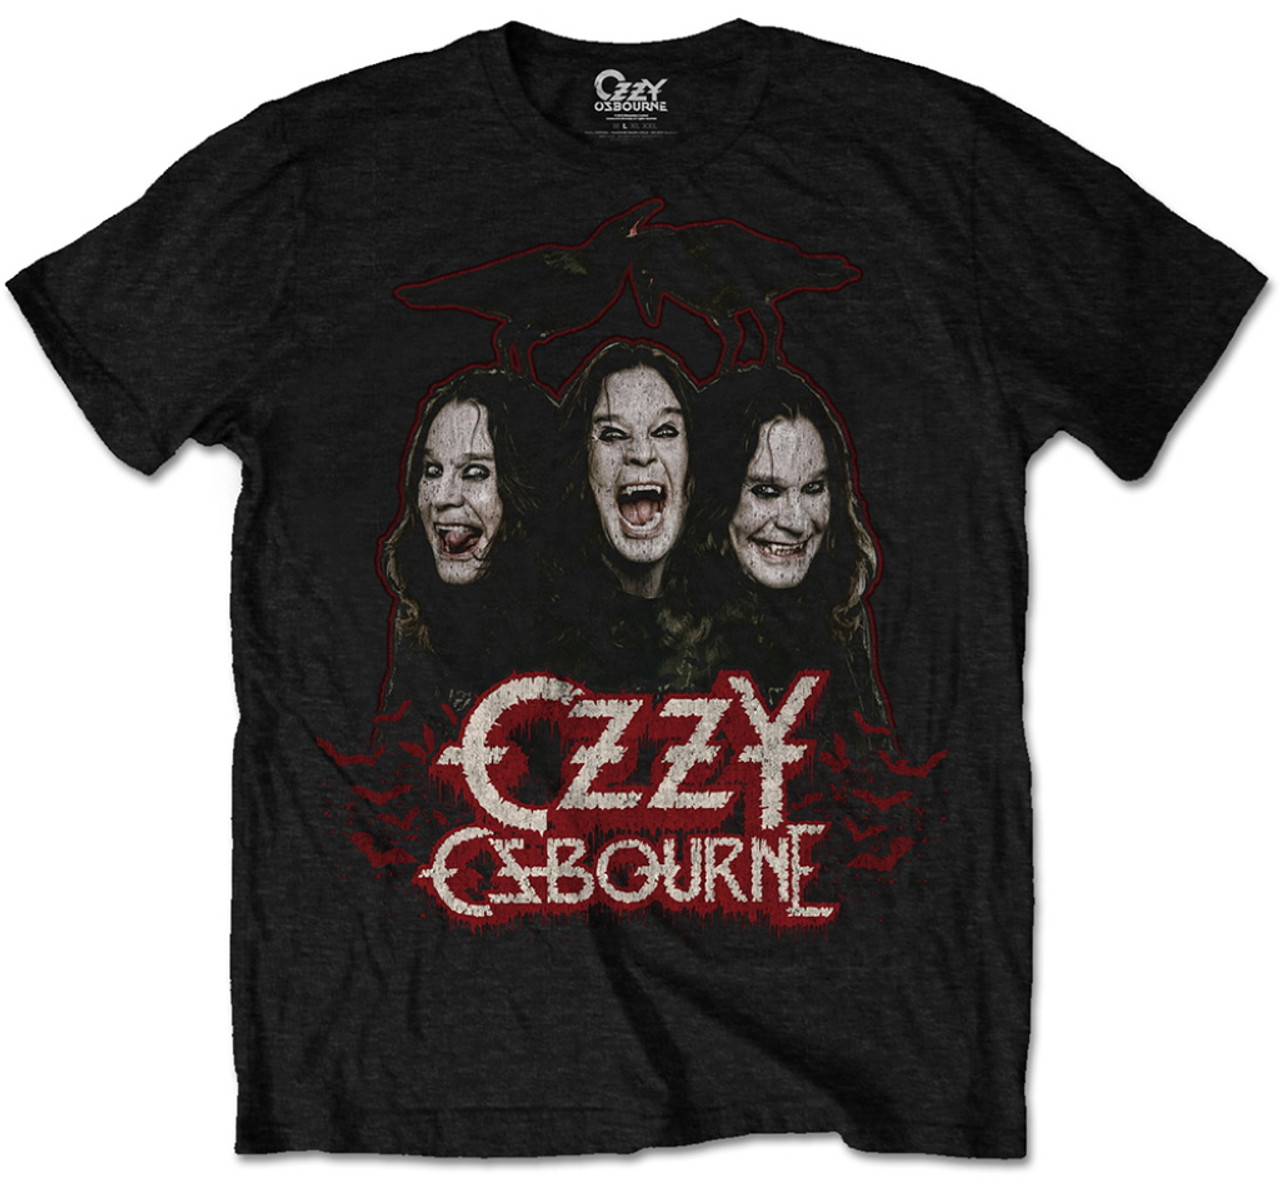 Ozzy Osbourne 'Crows & Bars' (Black) T-Shirt